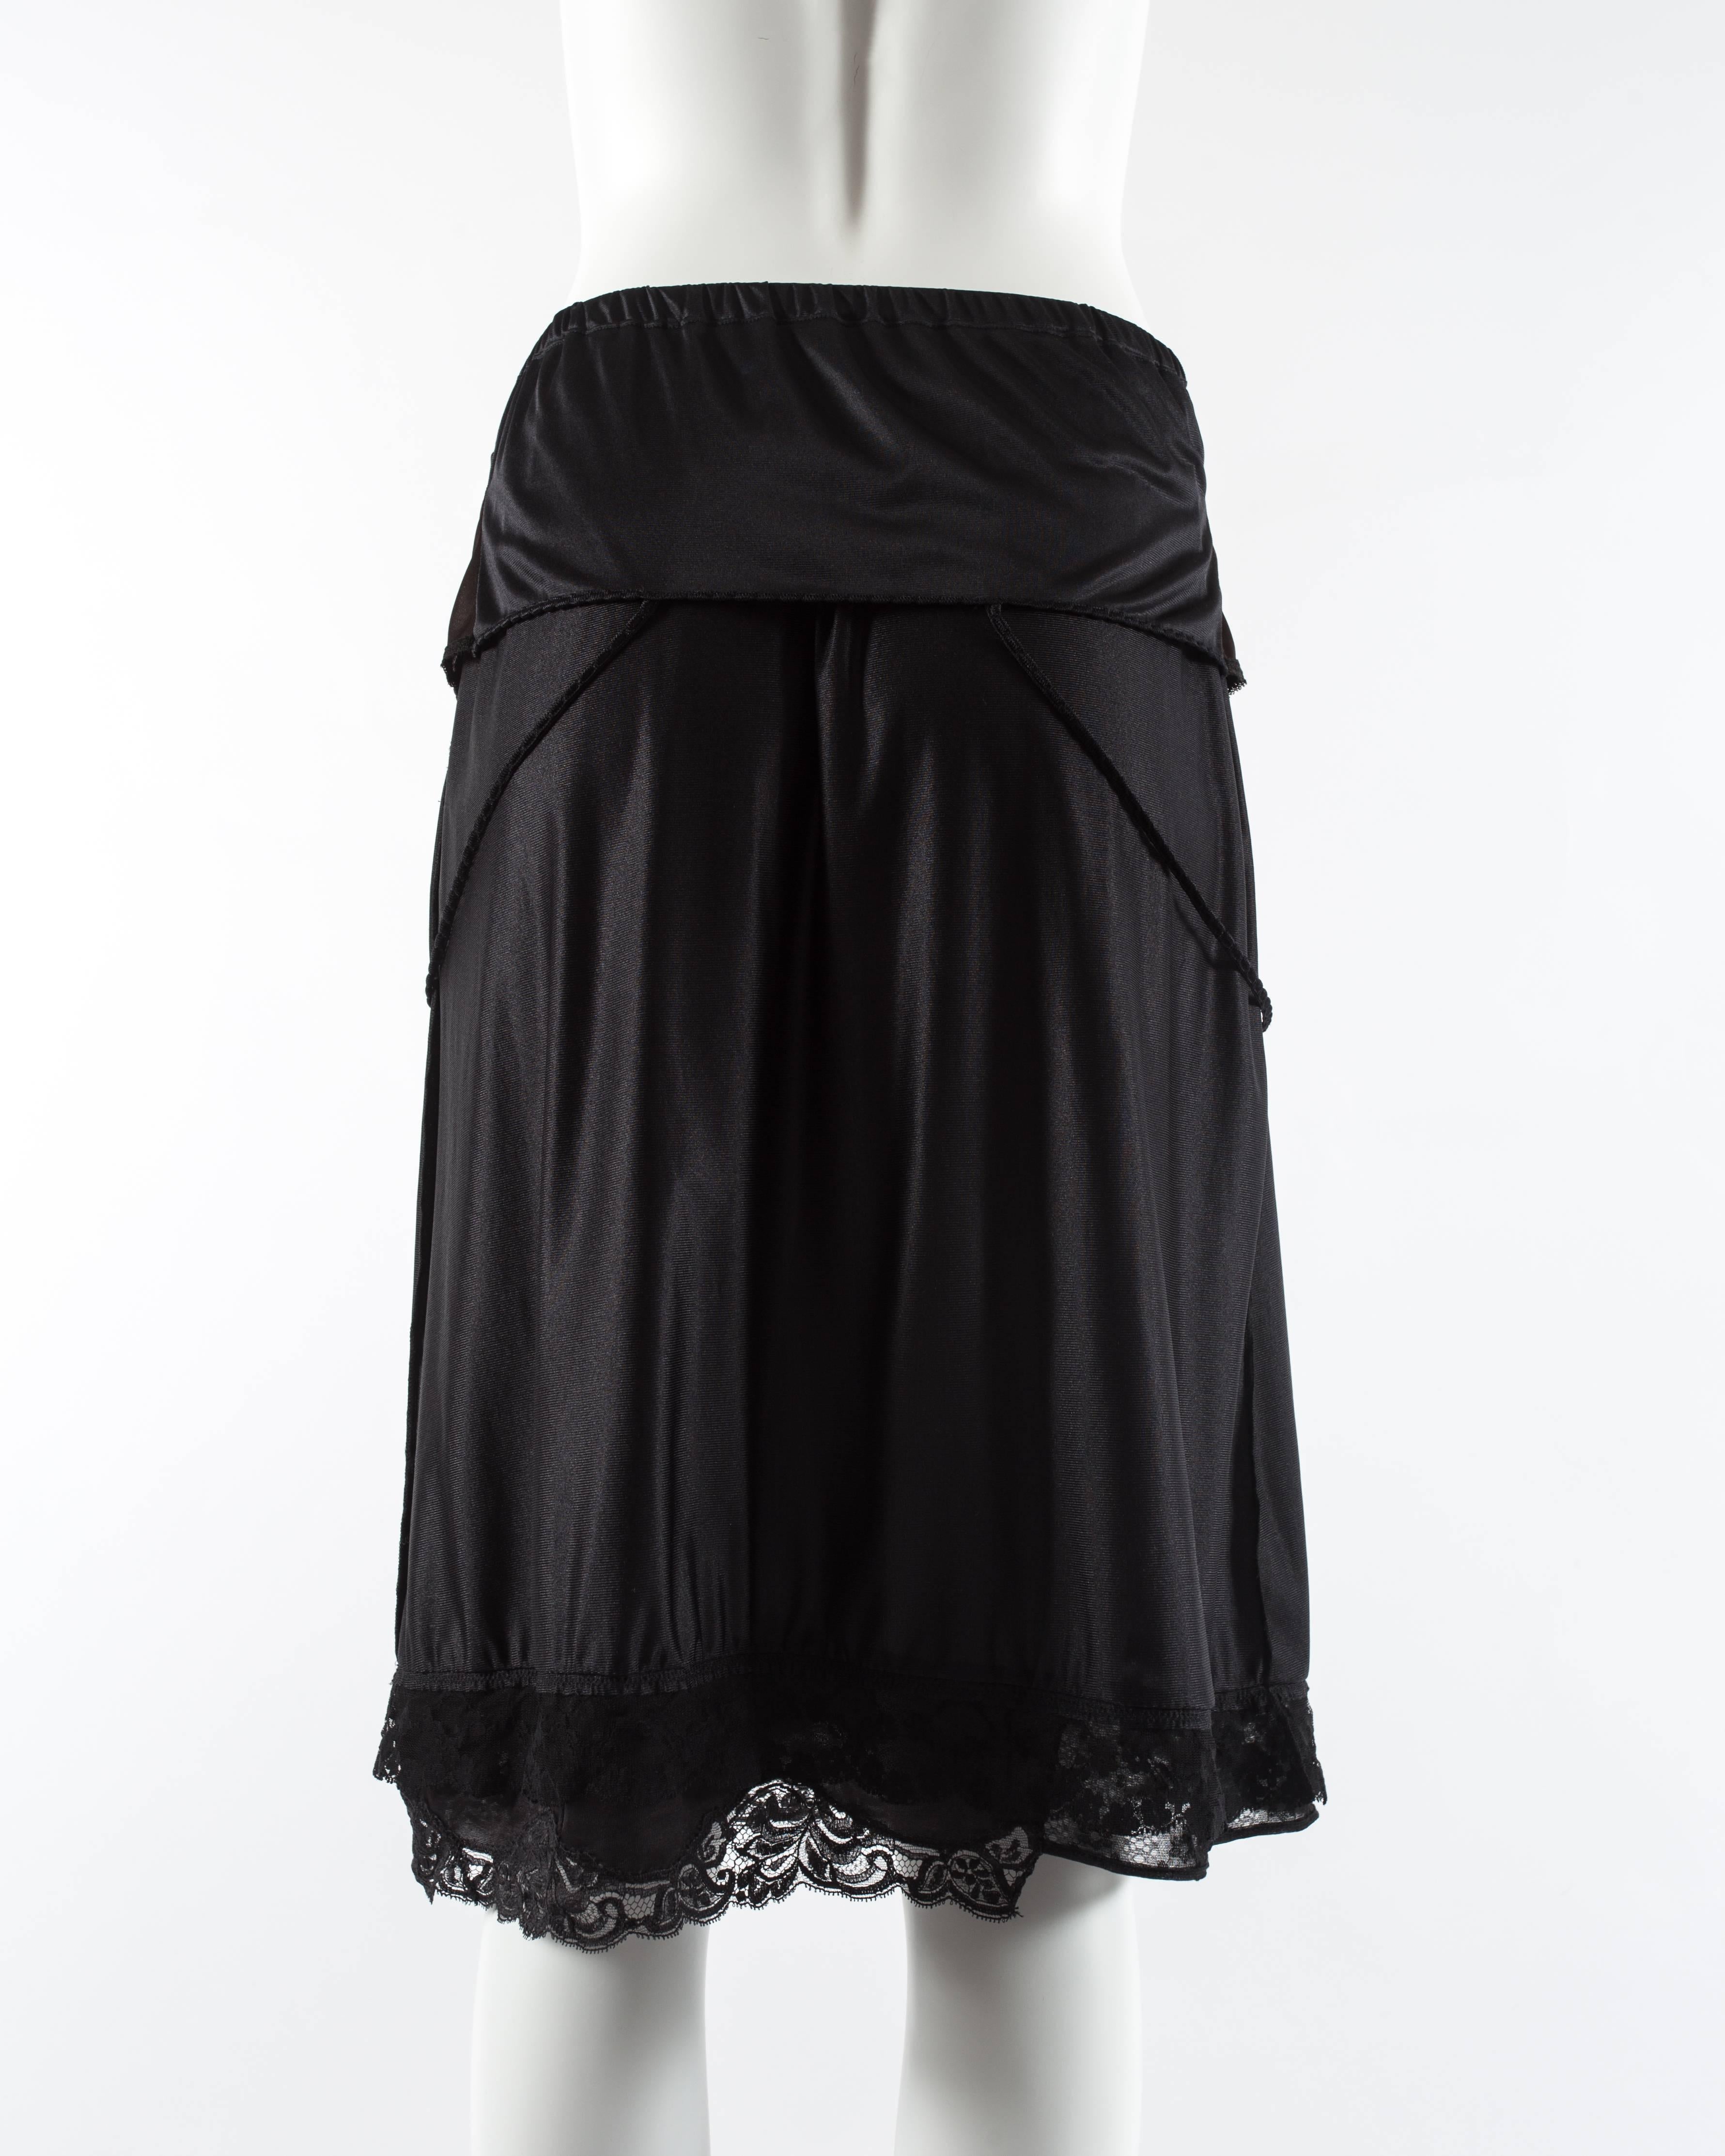 Black Martin Margiela black artisanal slip dress reconstructed into a skirt, ss 2003